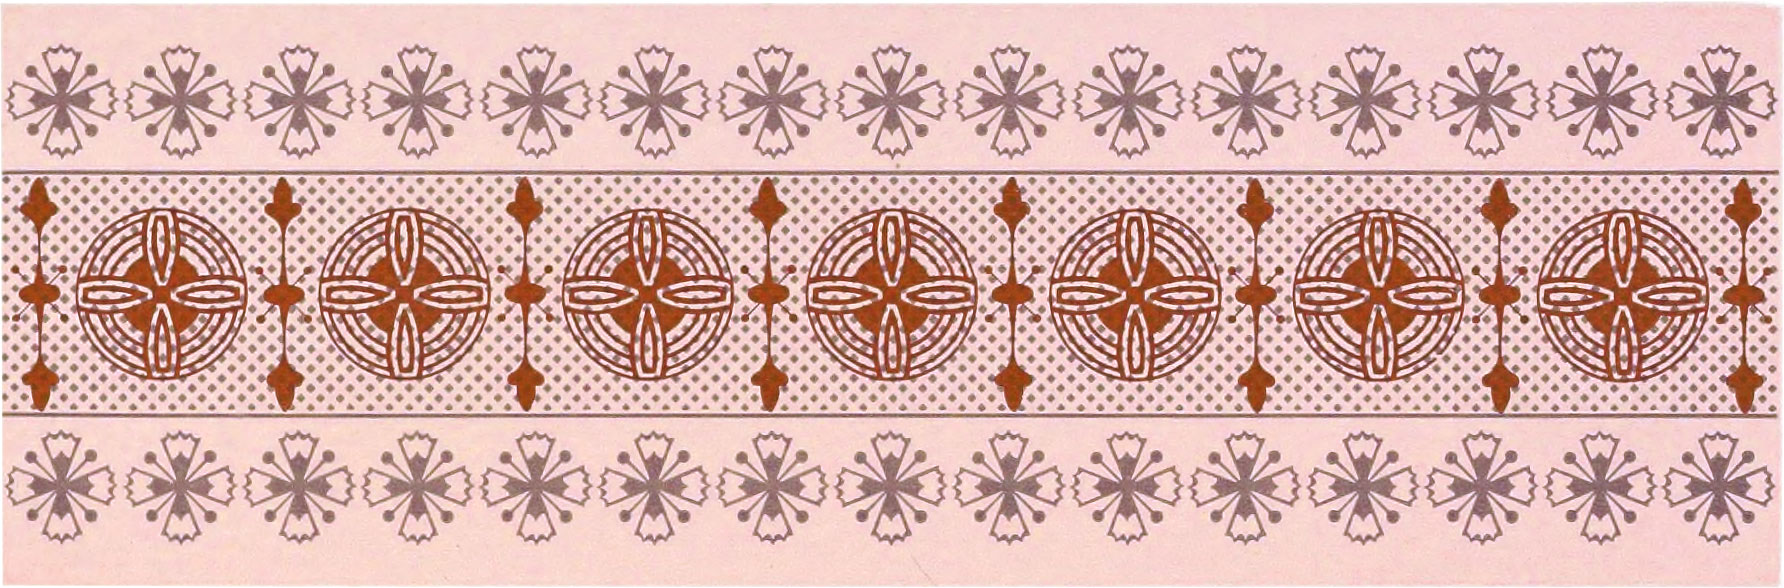 Ornate border comprising shades of maroon and pink